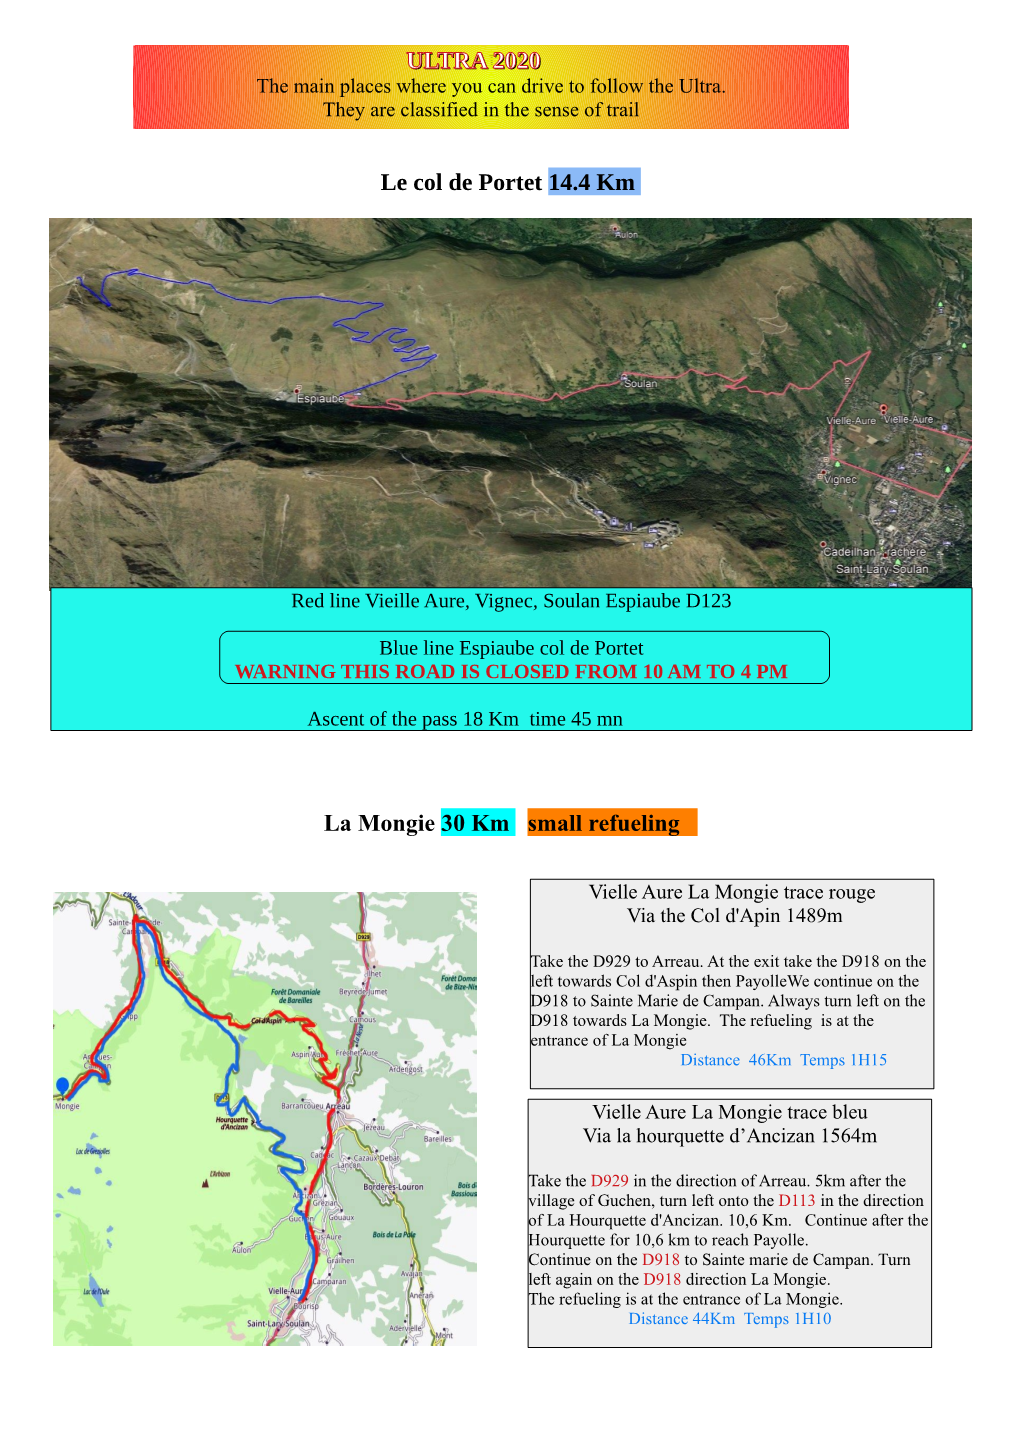 Le Col De Portet 14.4 Km La Mongie 30 Km Small Refueling ULTRA 2020